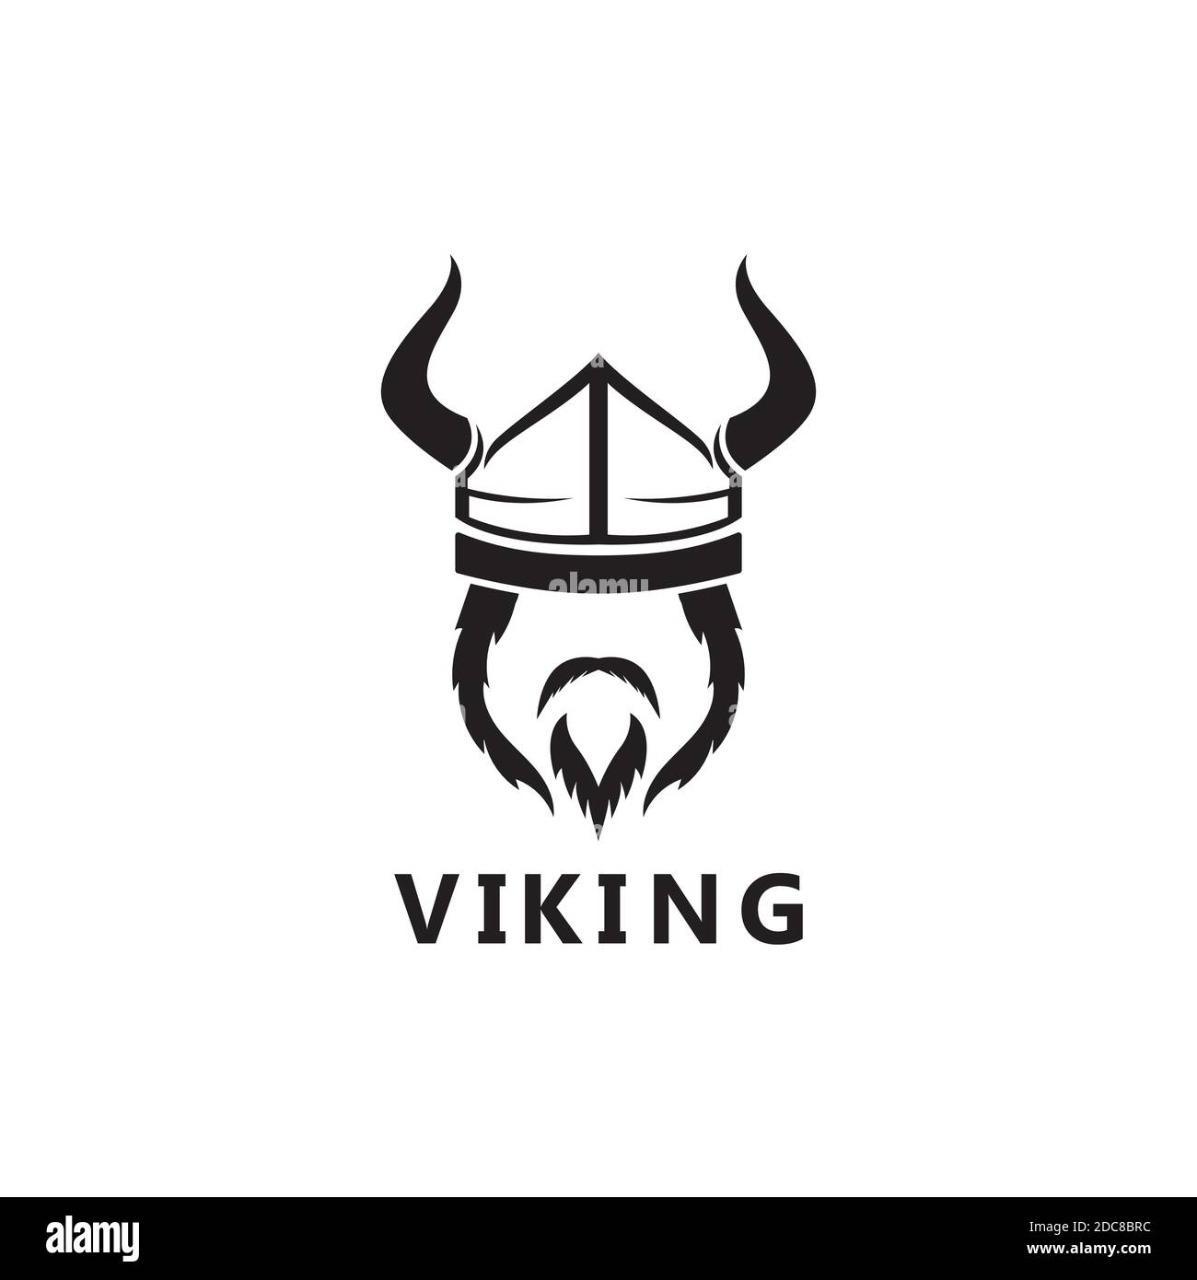 Vikingo95?s=hucztg6wwn+wvt3+3umm2nztp50c+rvj8sl9uxov0yg=